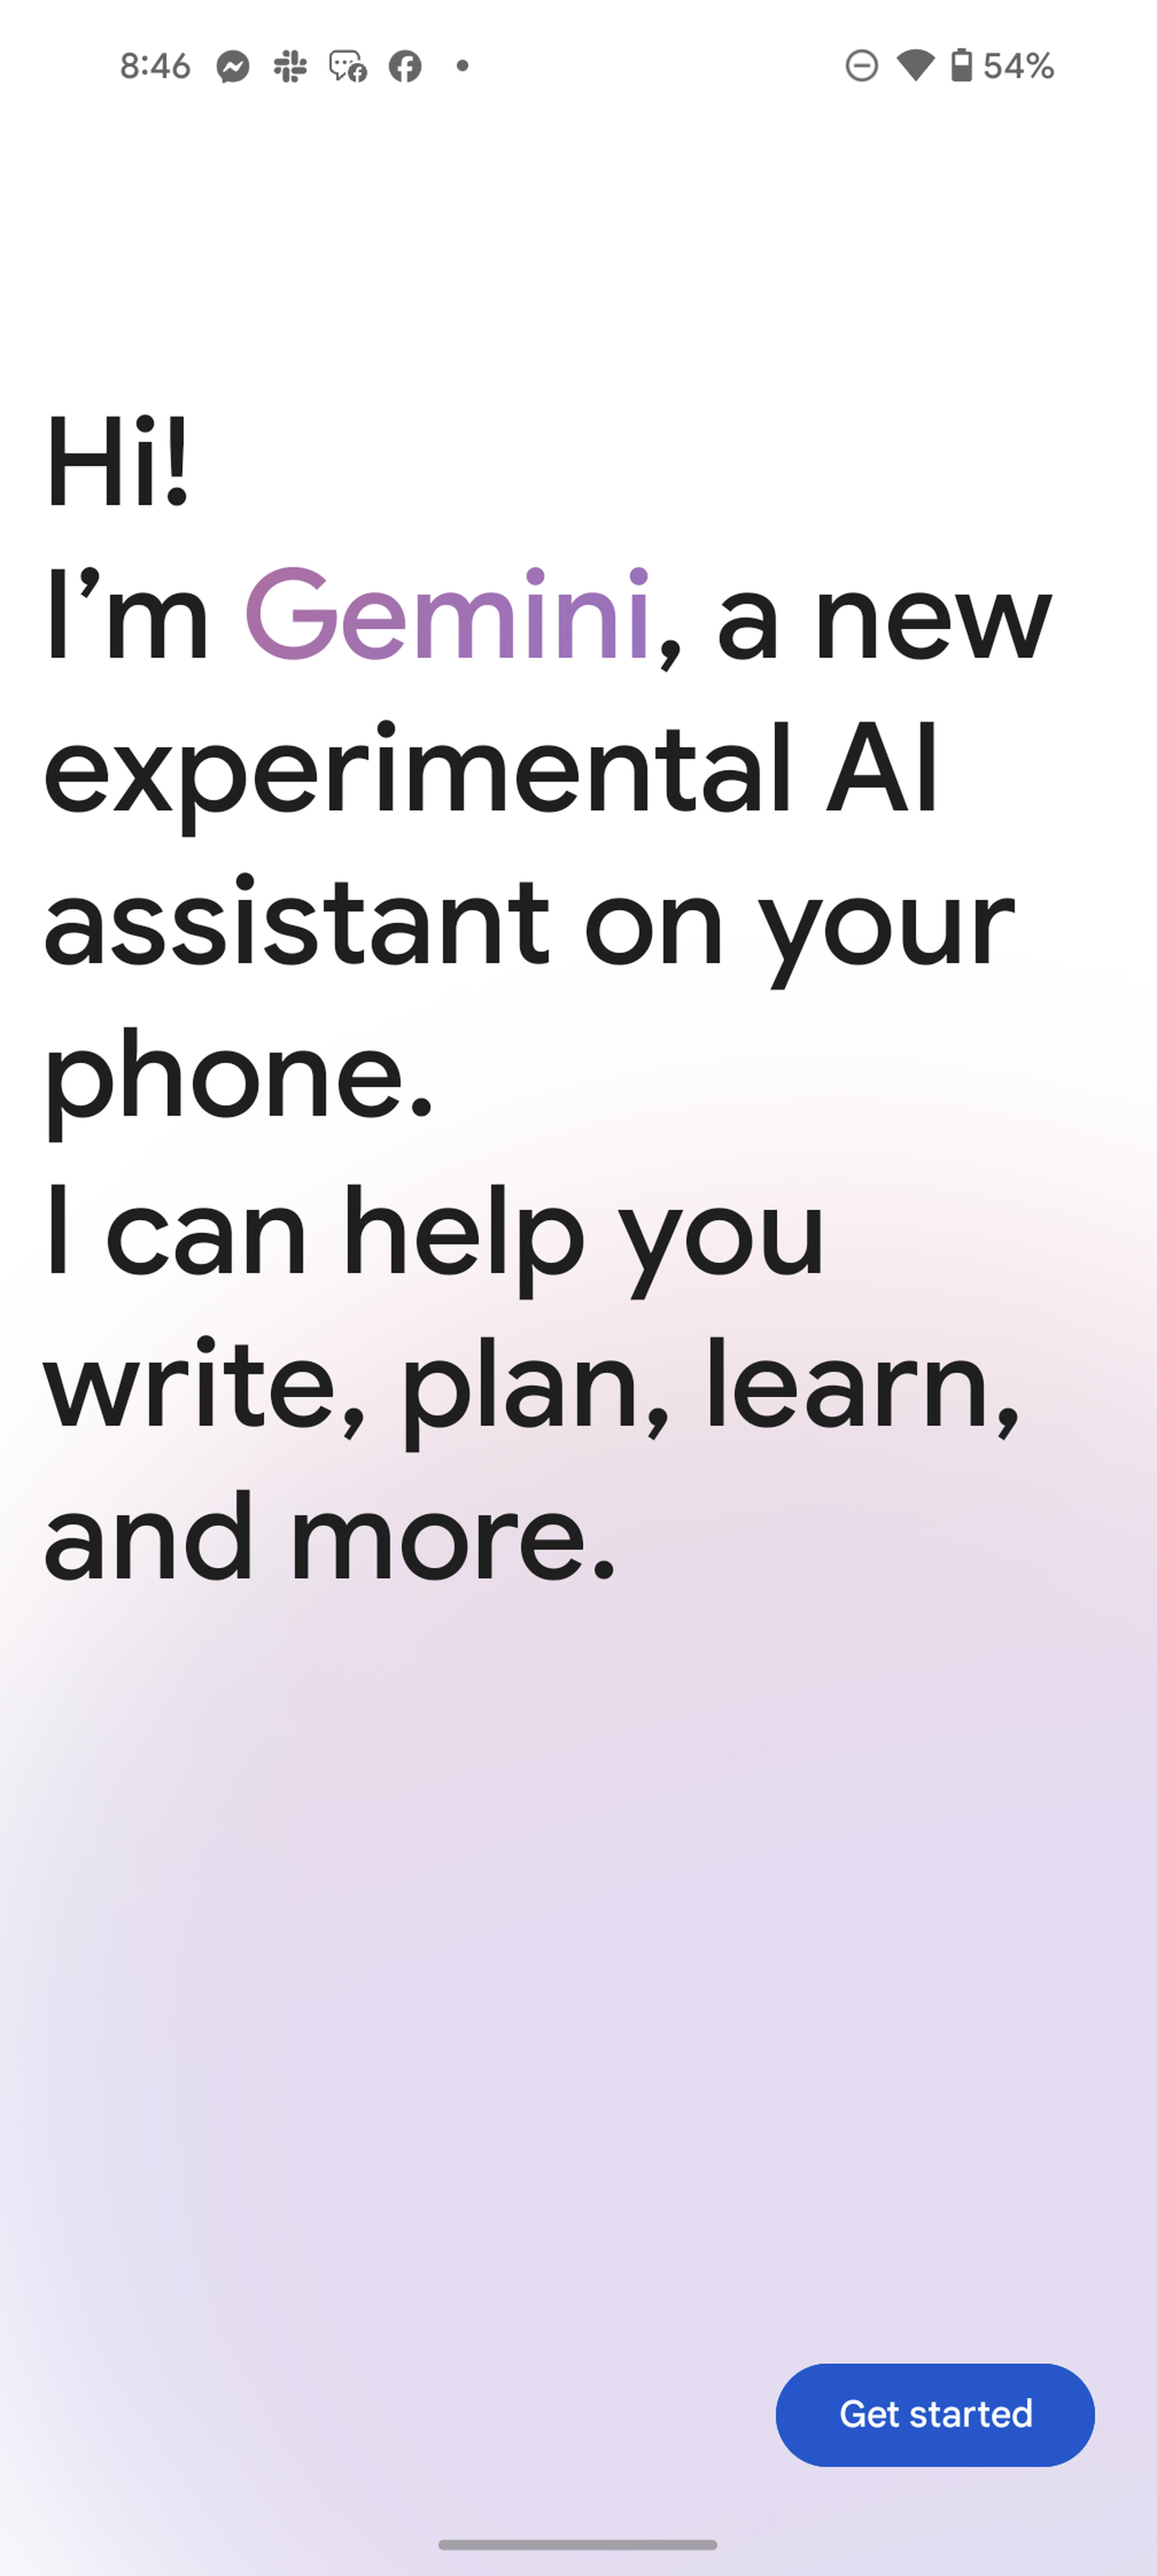 Screenshot of Gemini assistant introduction text